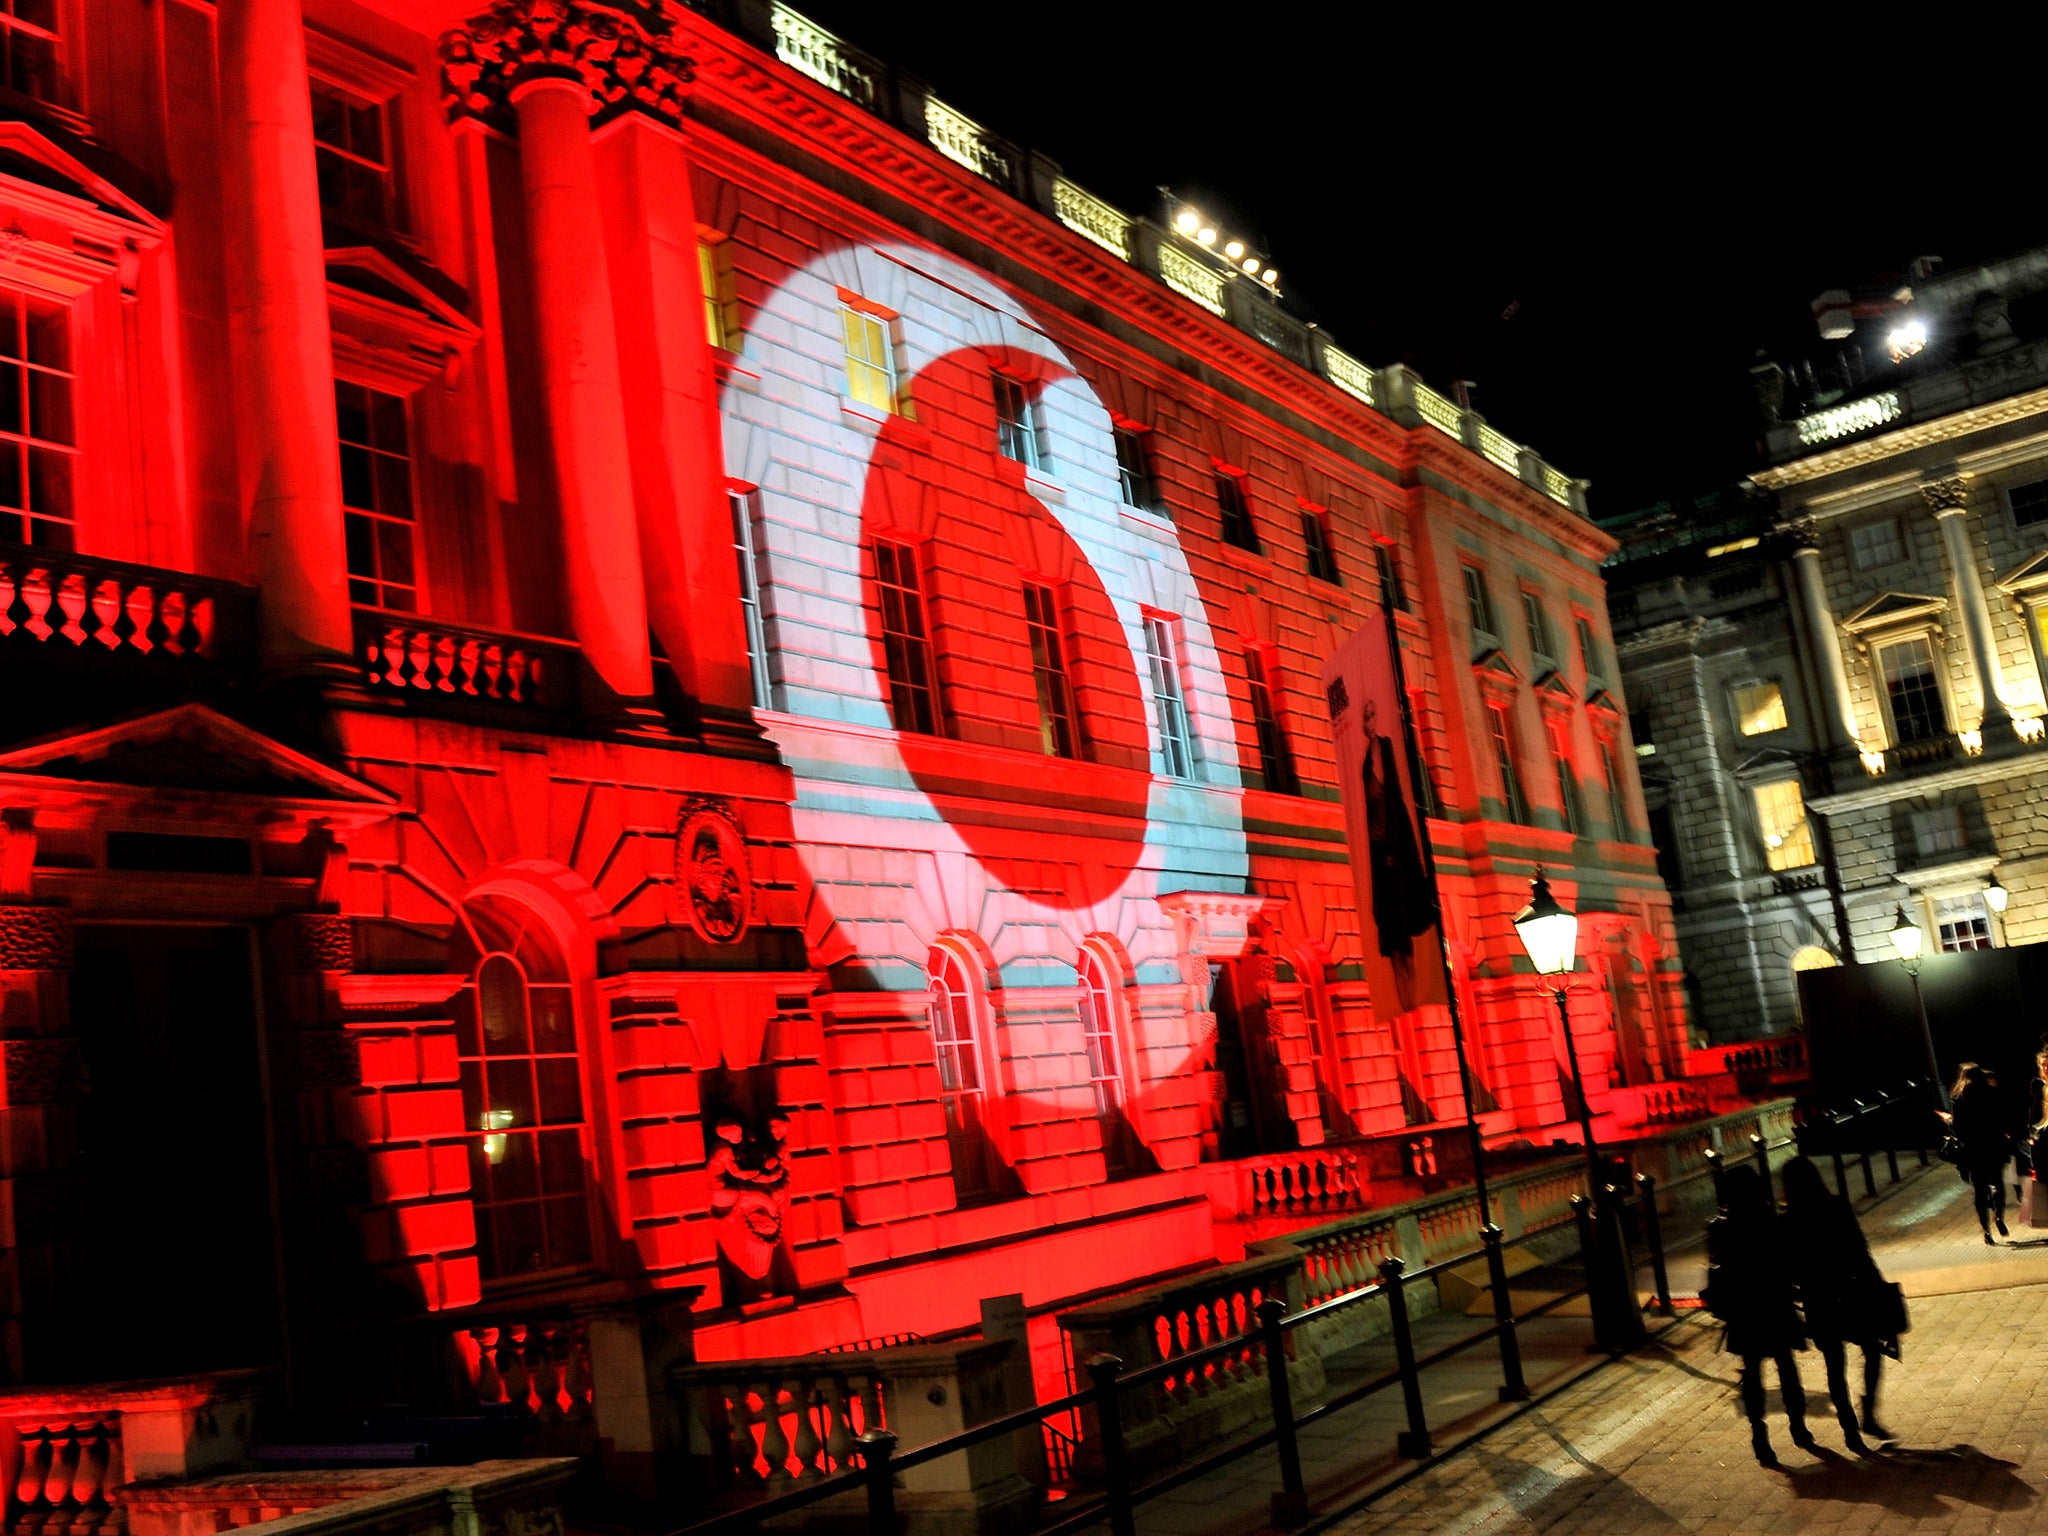 Vodafone sponsored London Fashion Weekend at Somerset House last February